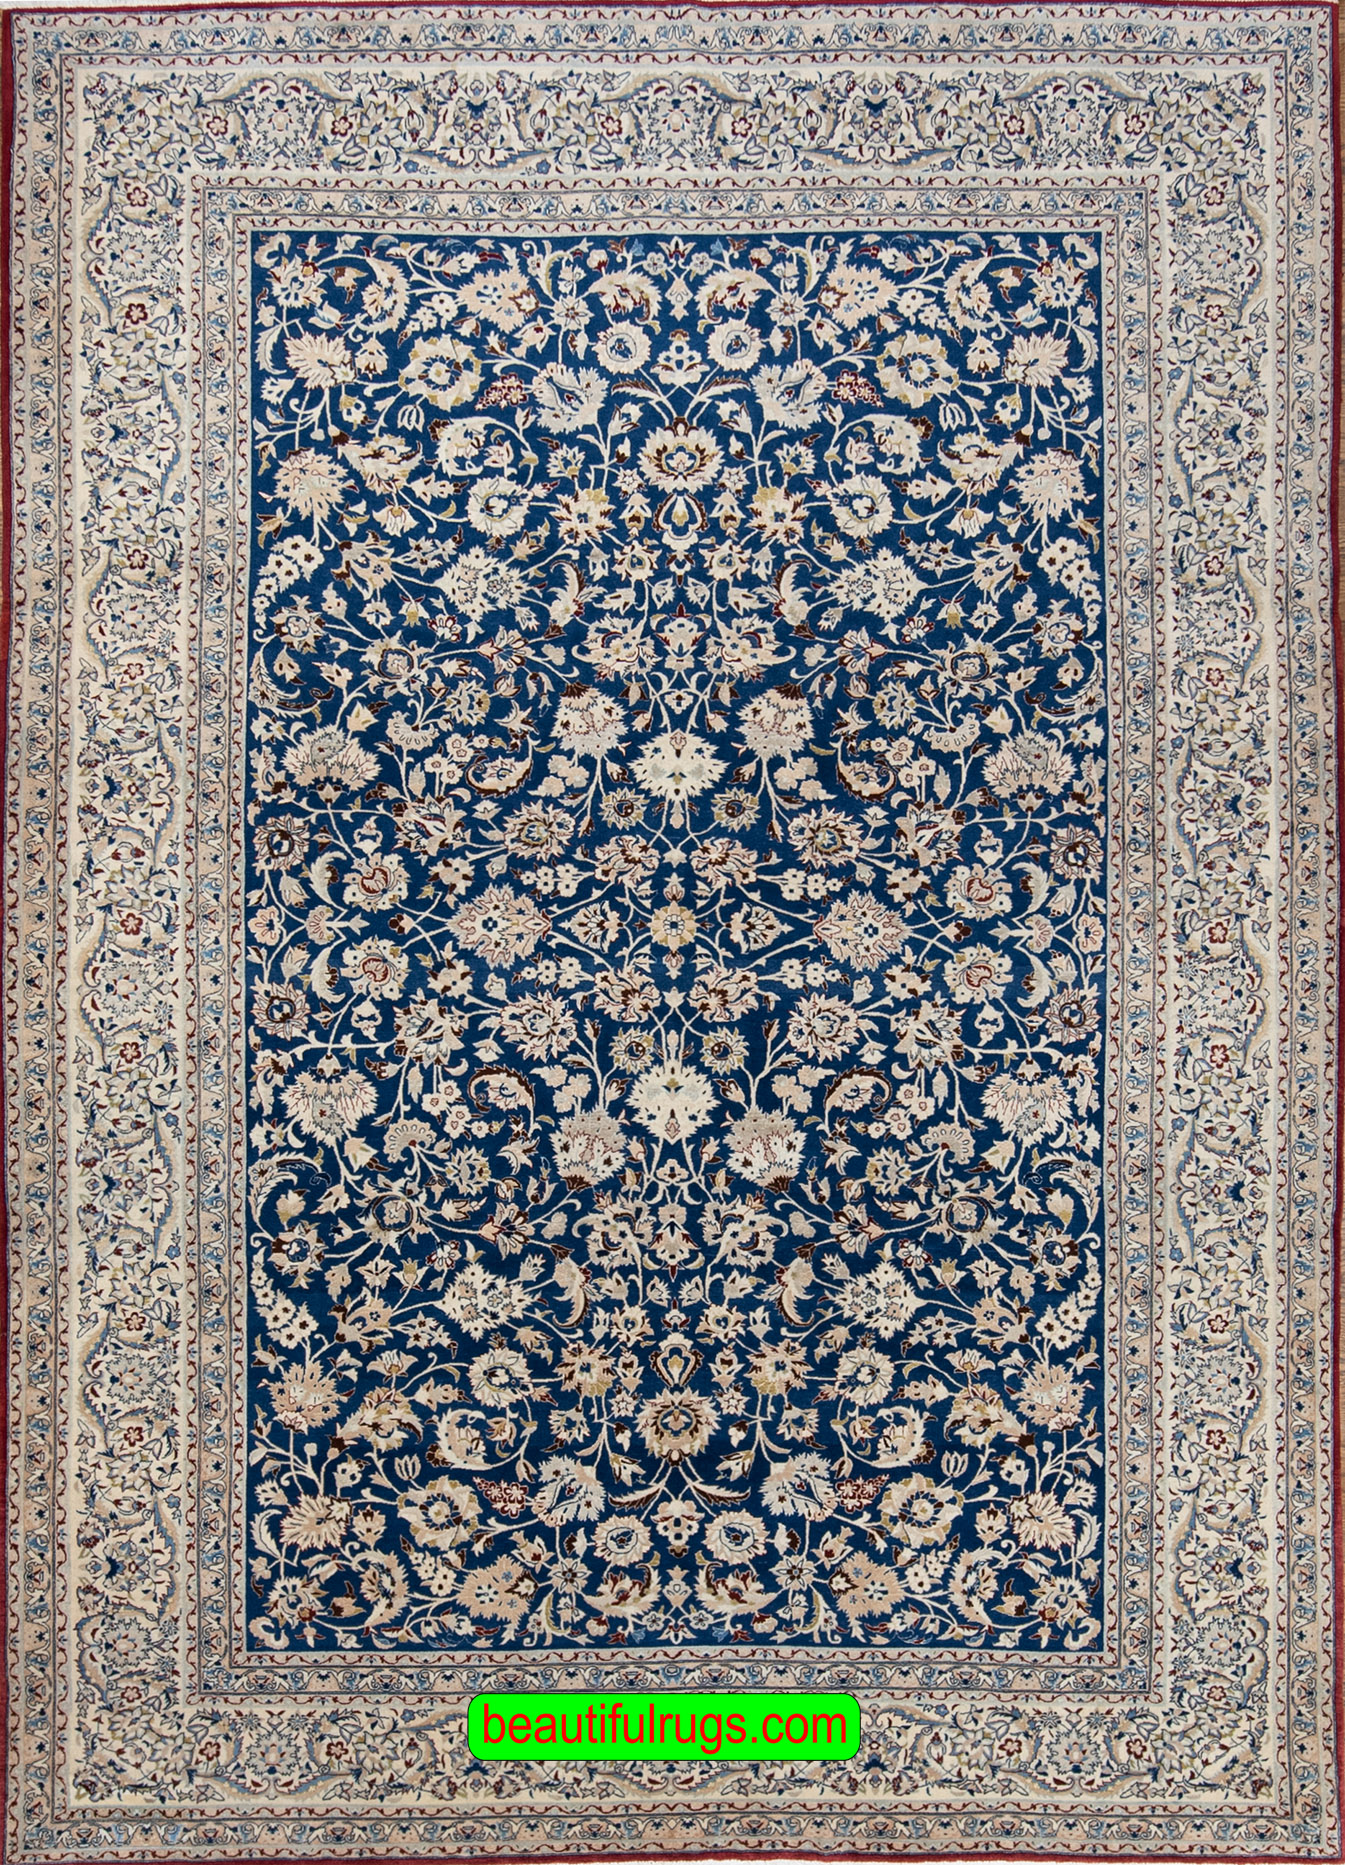 Persian Tudeshk rug, floral design in blue color. Size 7x10.3.